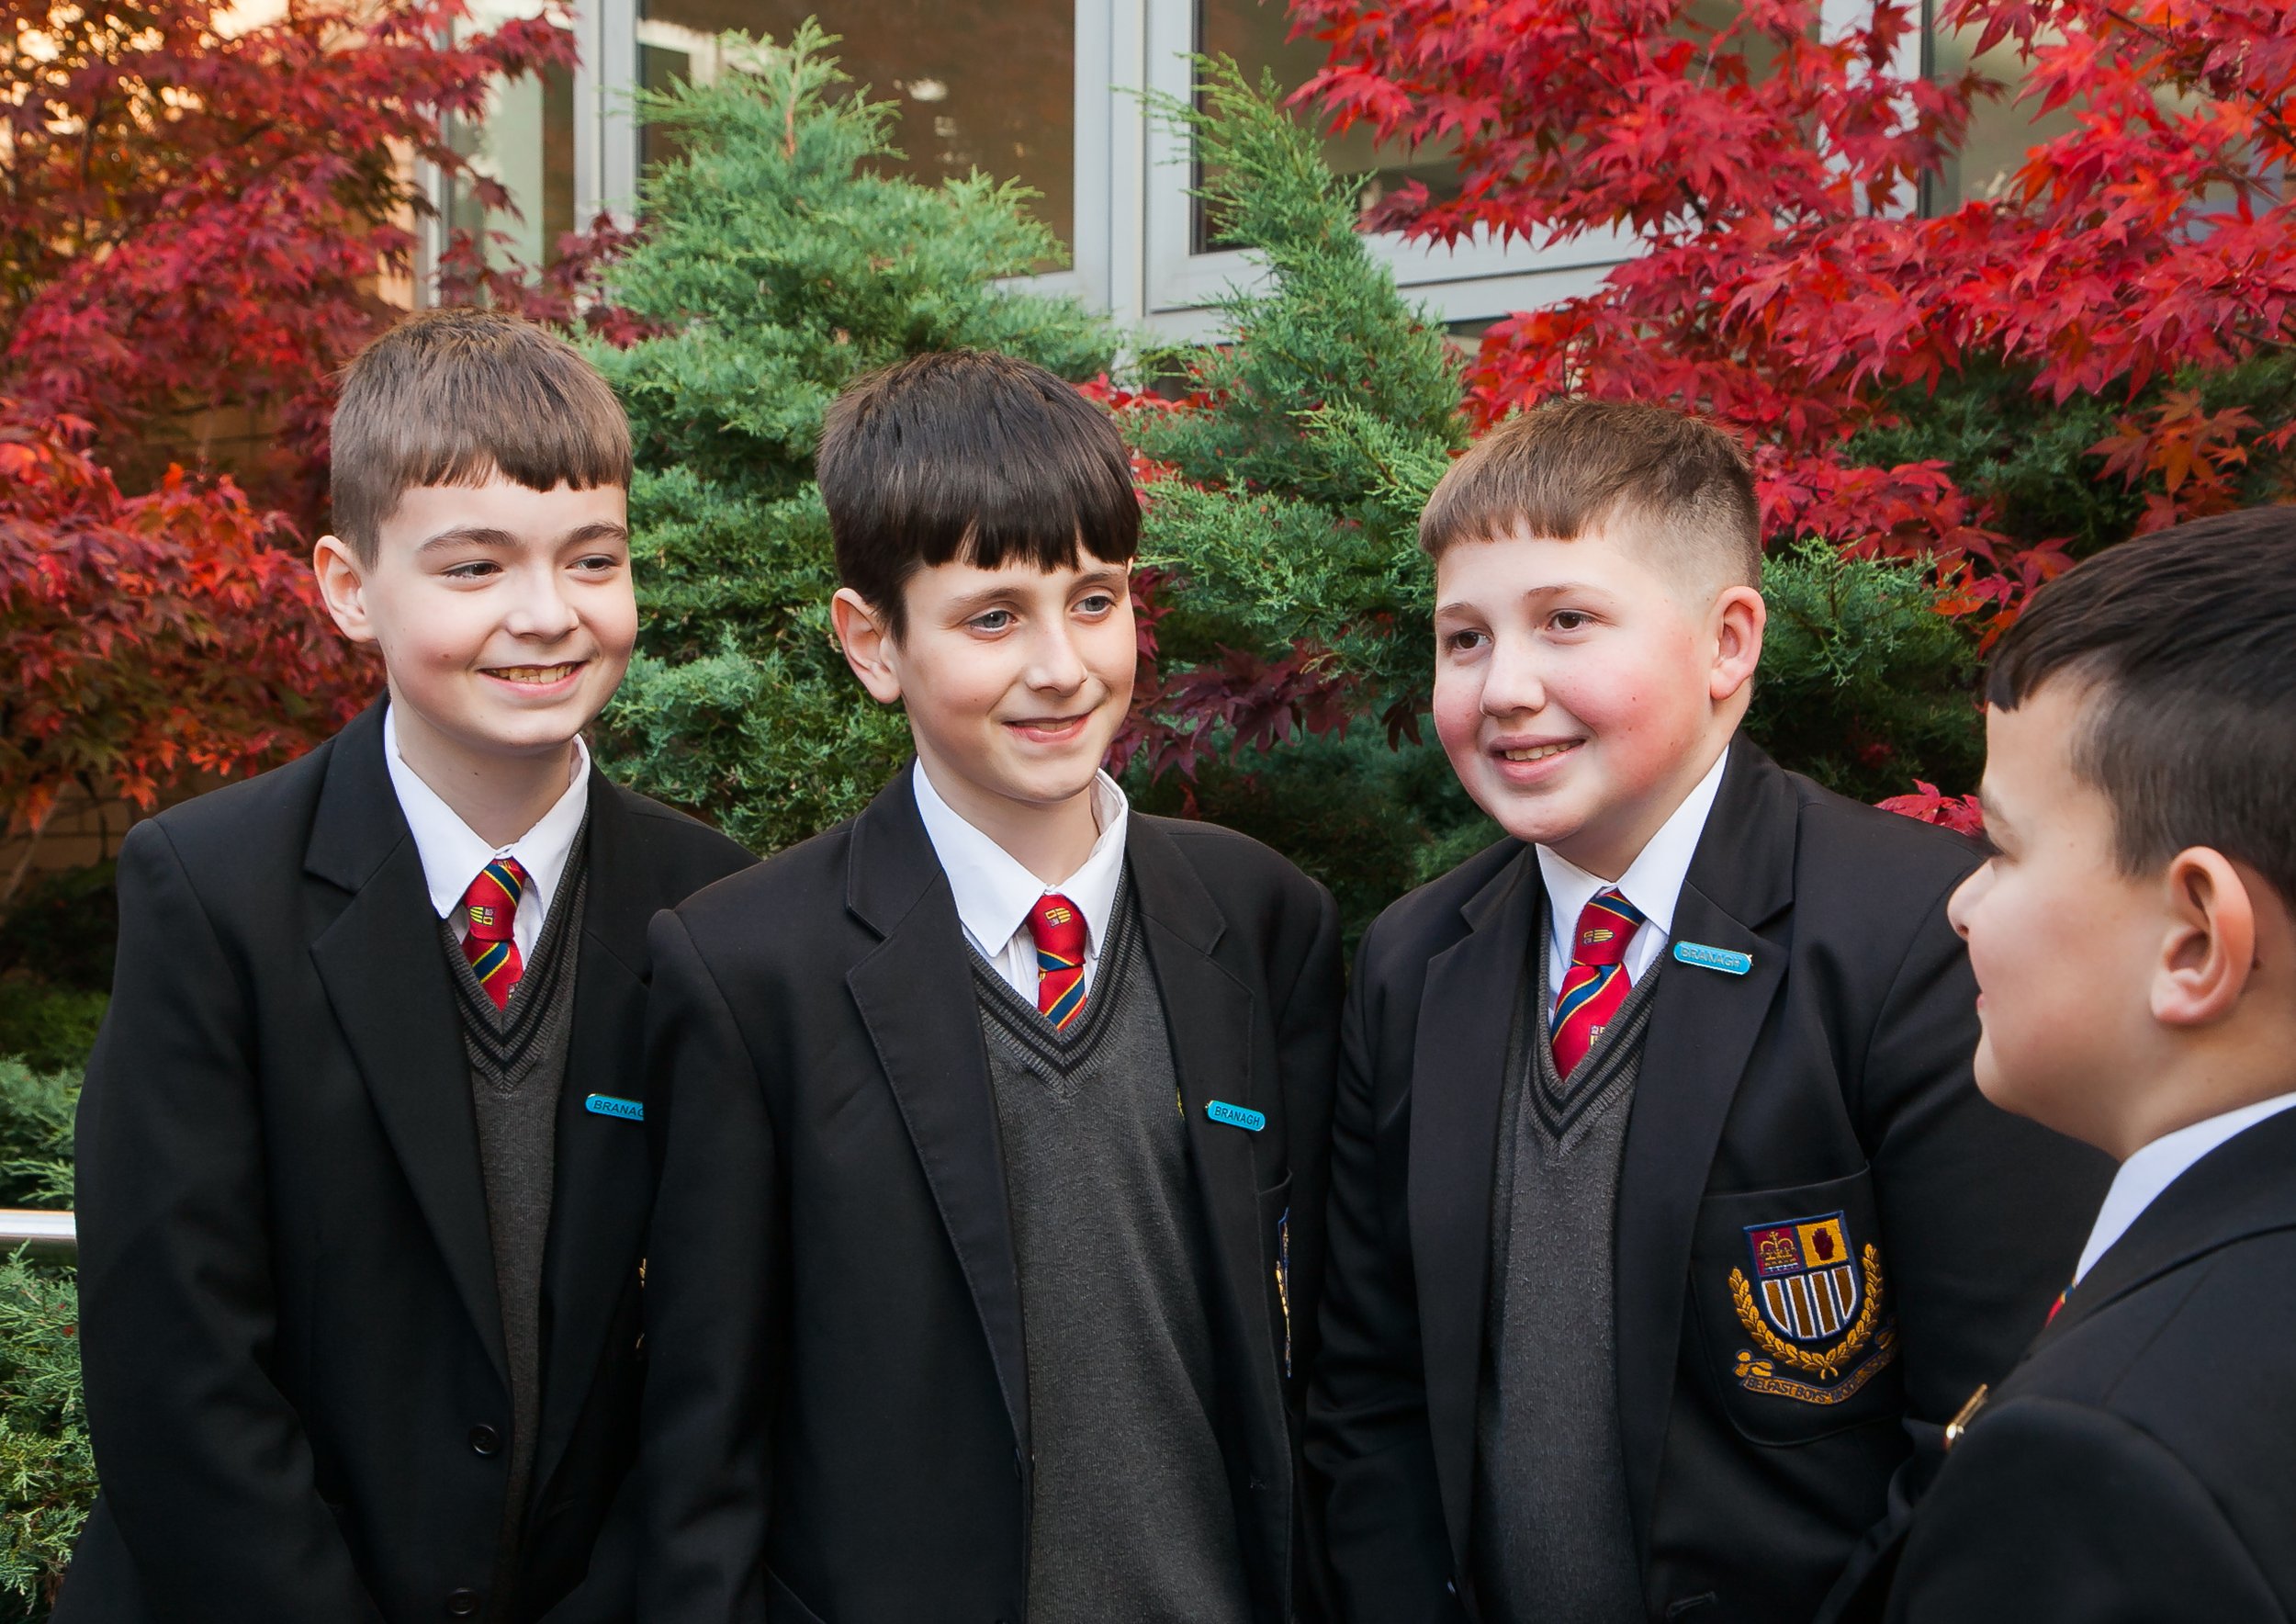 Uniform — Belfast Boys' Model School